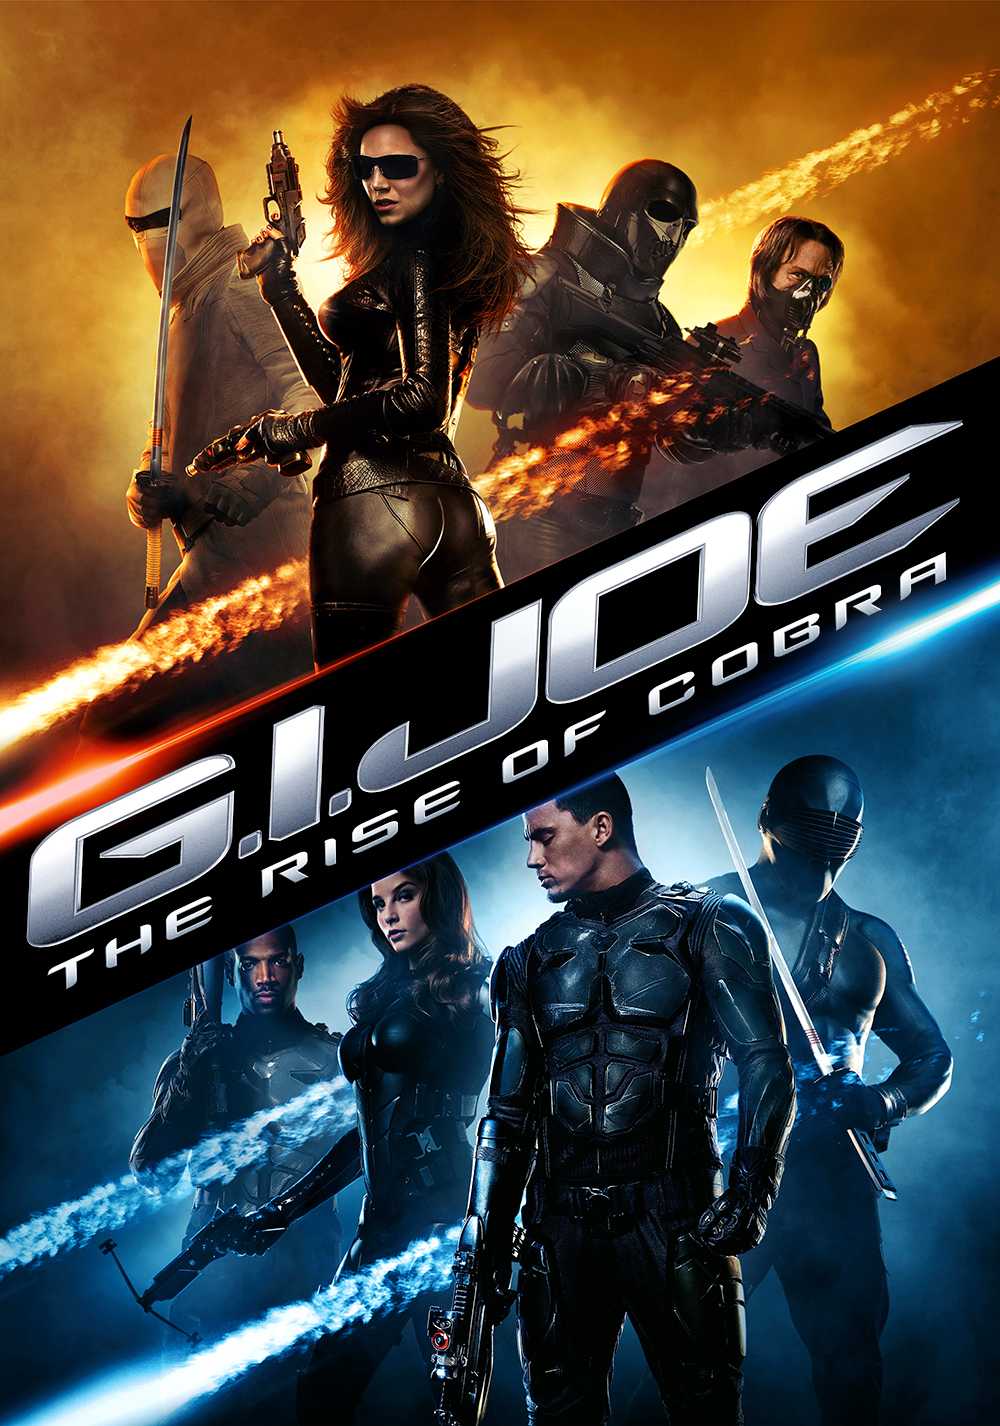 The rise of cobra. G.I. Joe: the Rise of Cobra 2009 Постер. G.I. Joe: бросок кобры 1. G I Joe бросок кобры 2009 Постер.